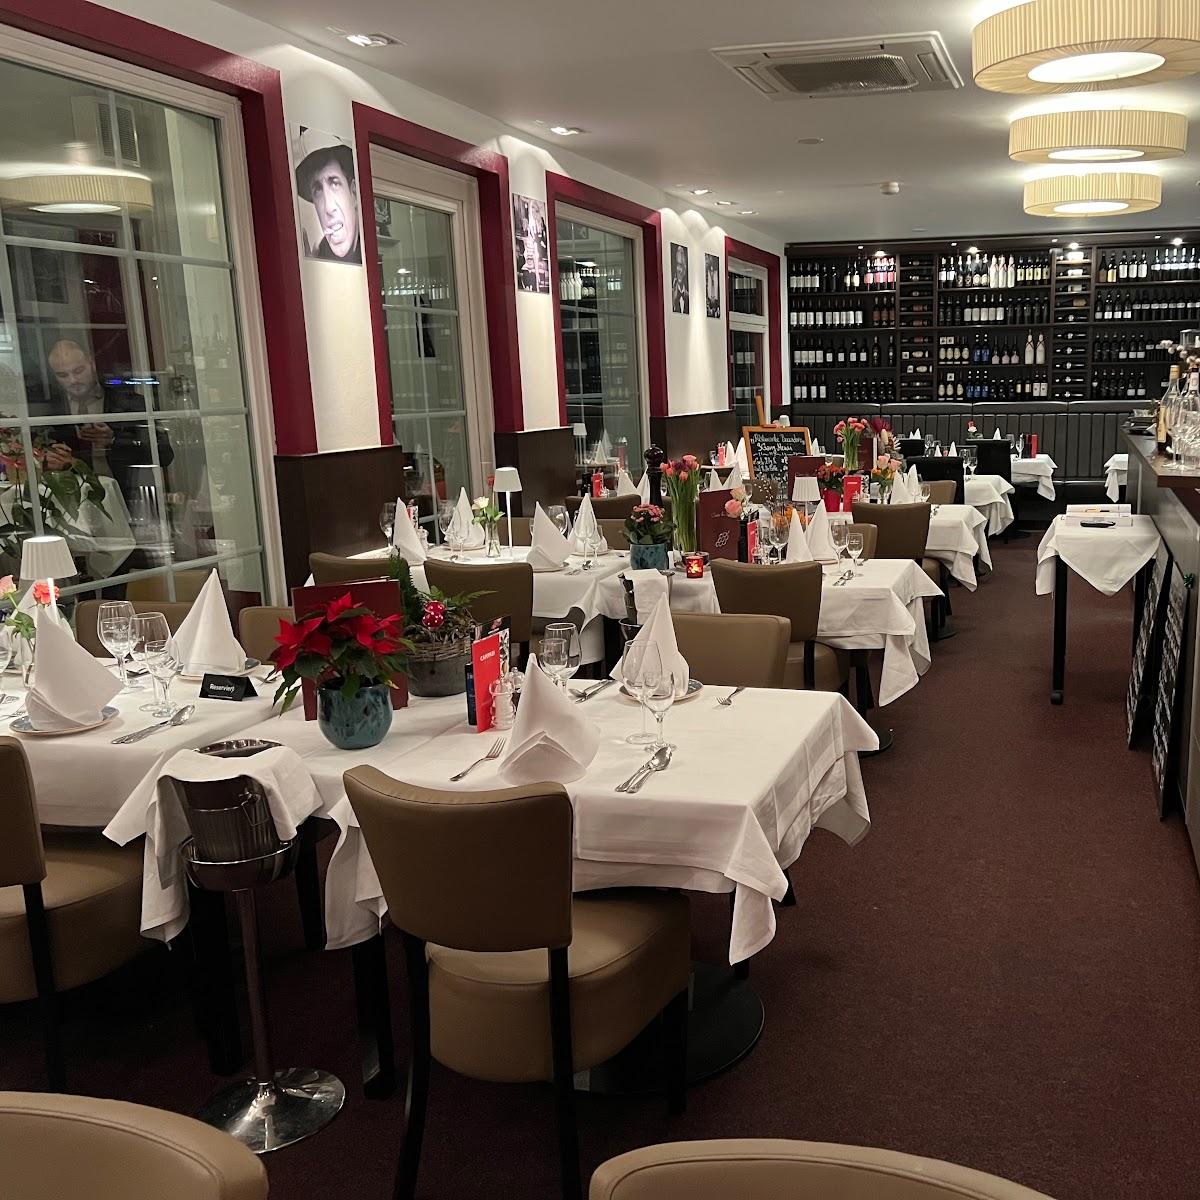 Restaurant "Boccadoro bei Bellini" in Berlin